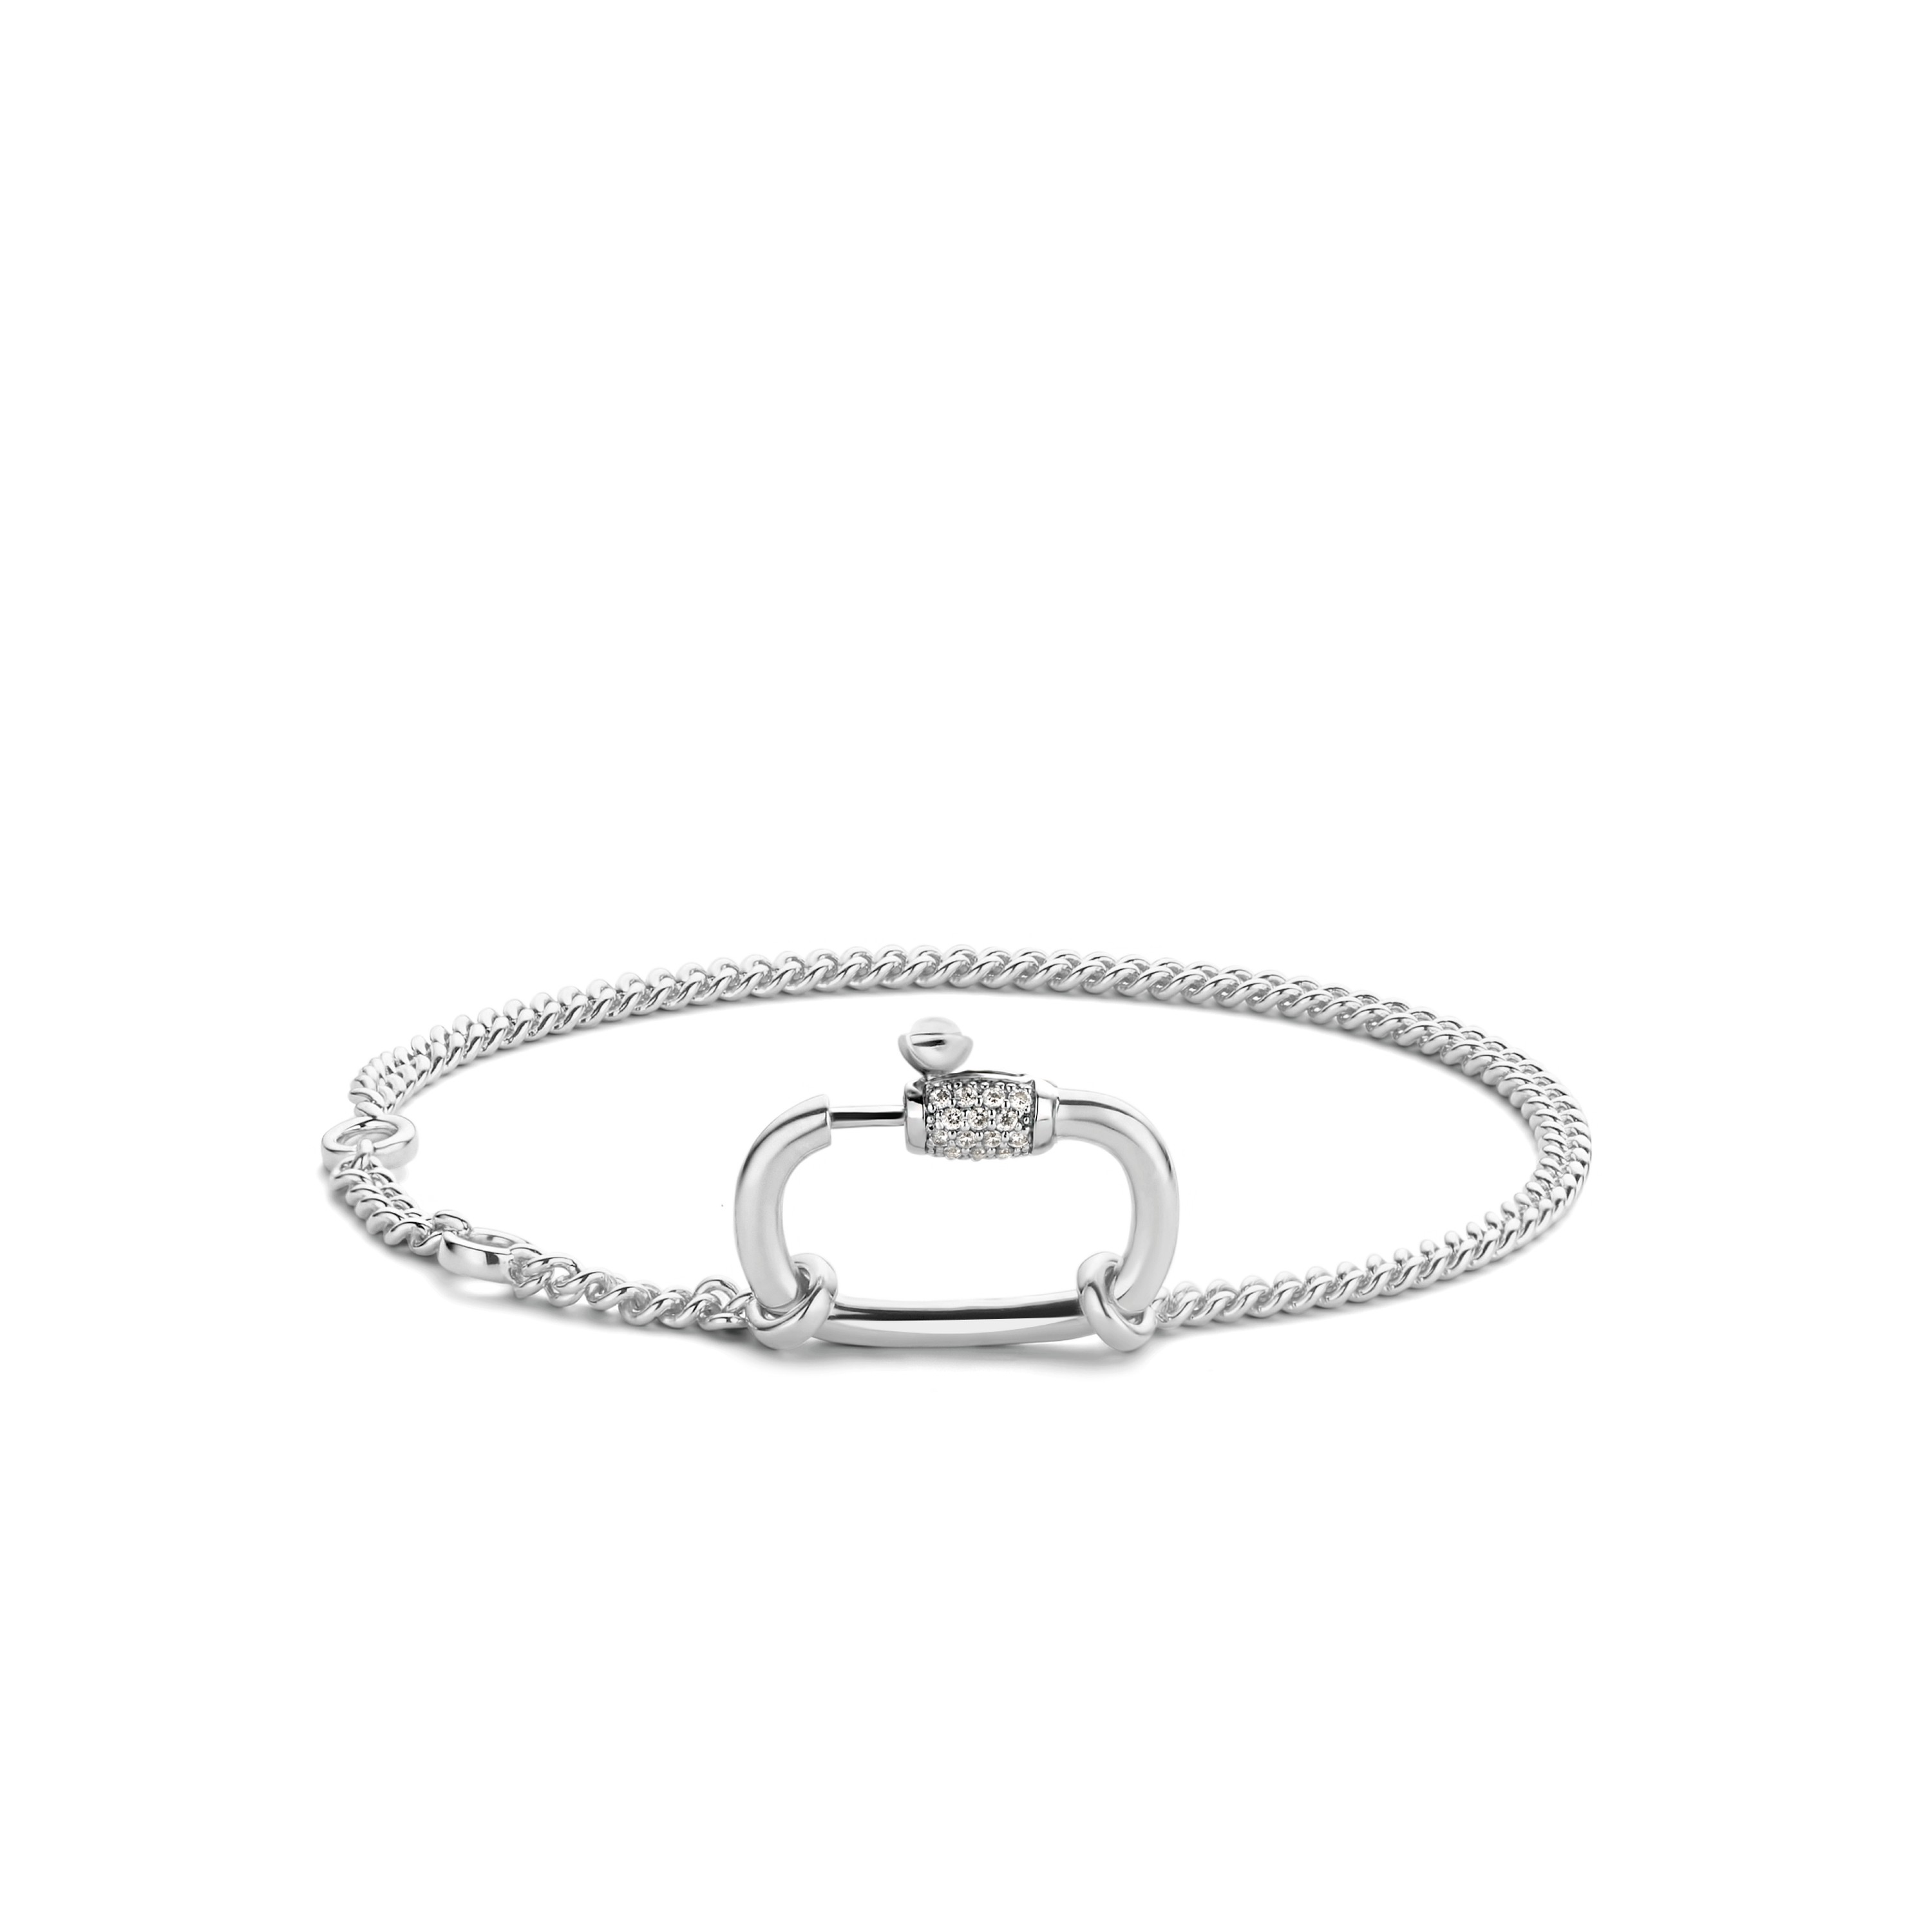 TI SENTO - Milano Bracelet 2962SI Gala Jewelers Inc. White Oak, PA